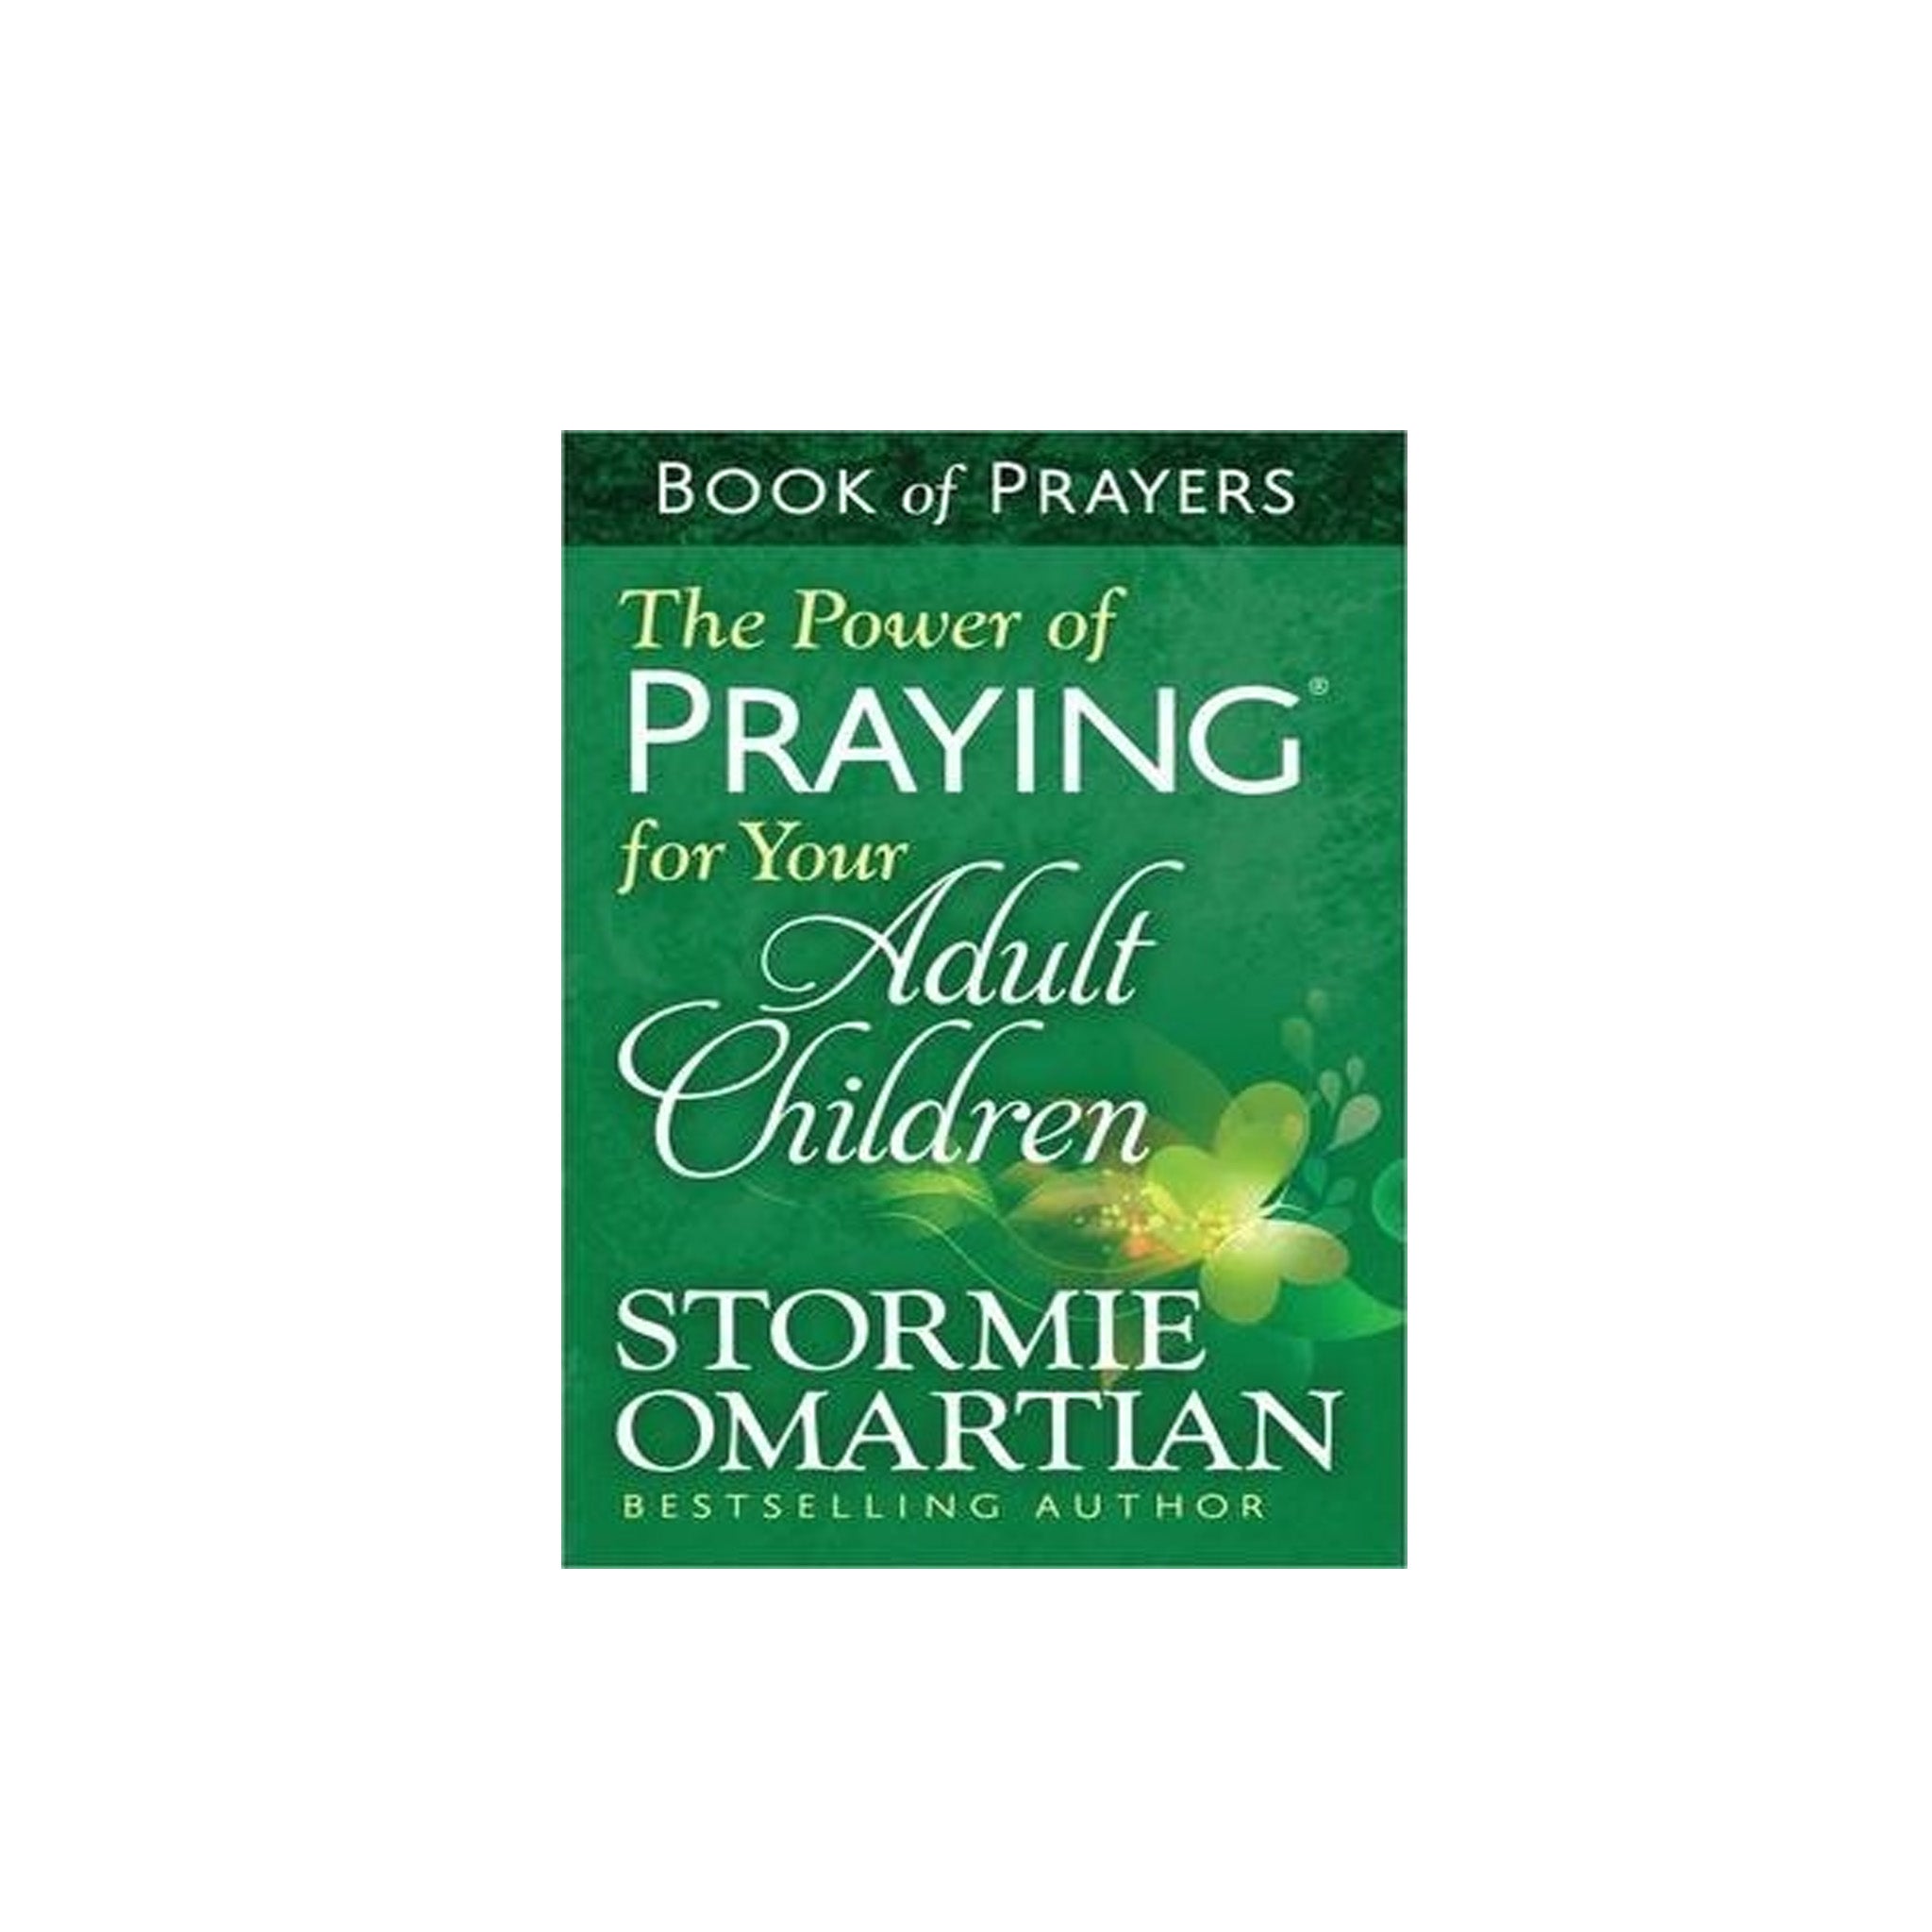 STORMIE PRAYING ADULT CHILDREN